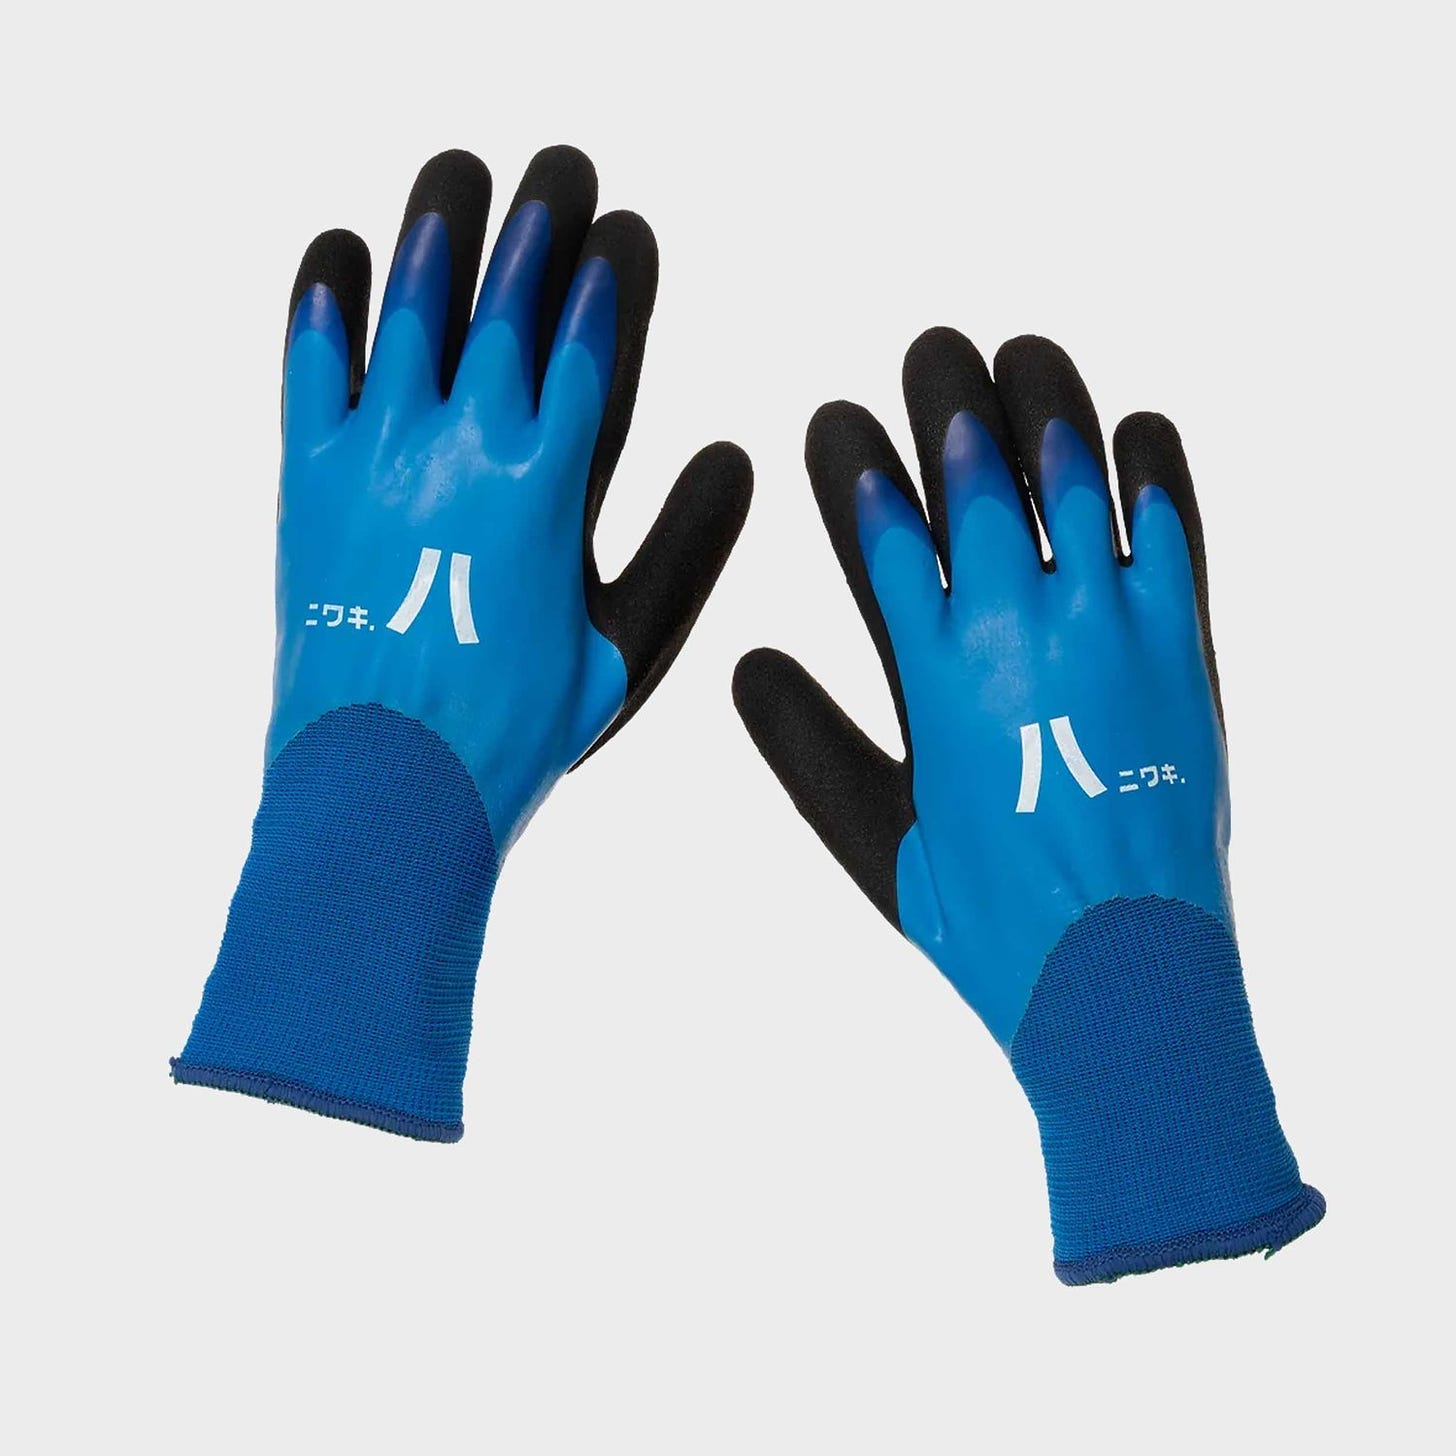 niwaki-winter-gloves-1.jpg